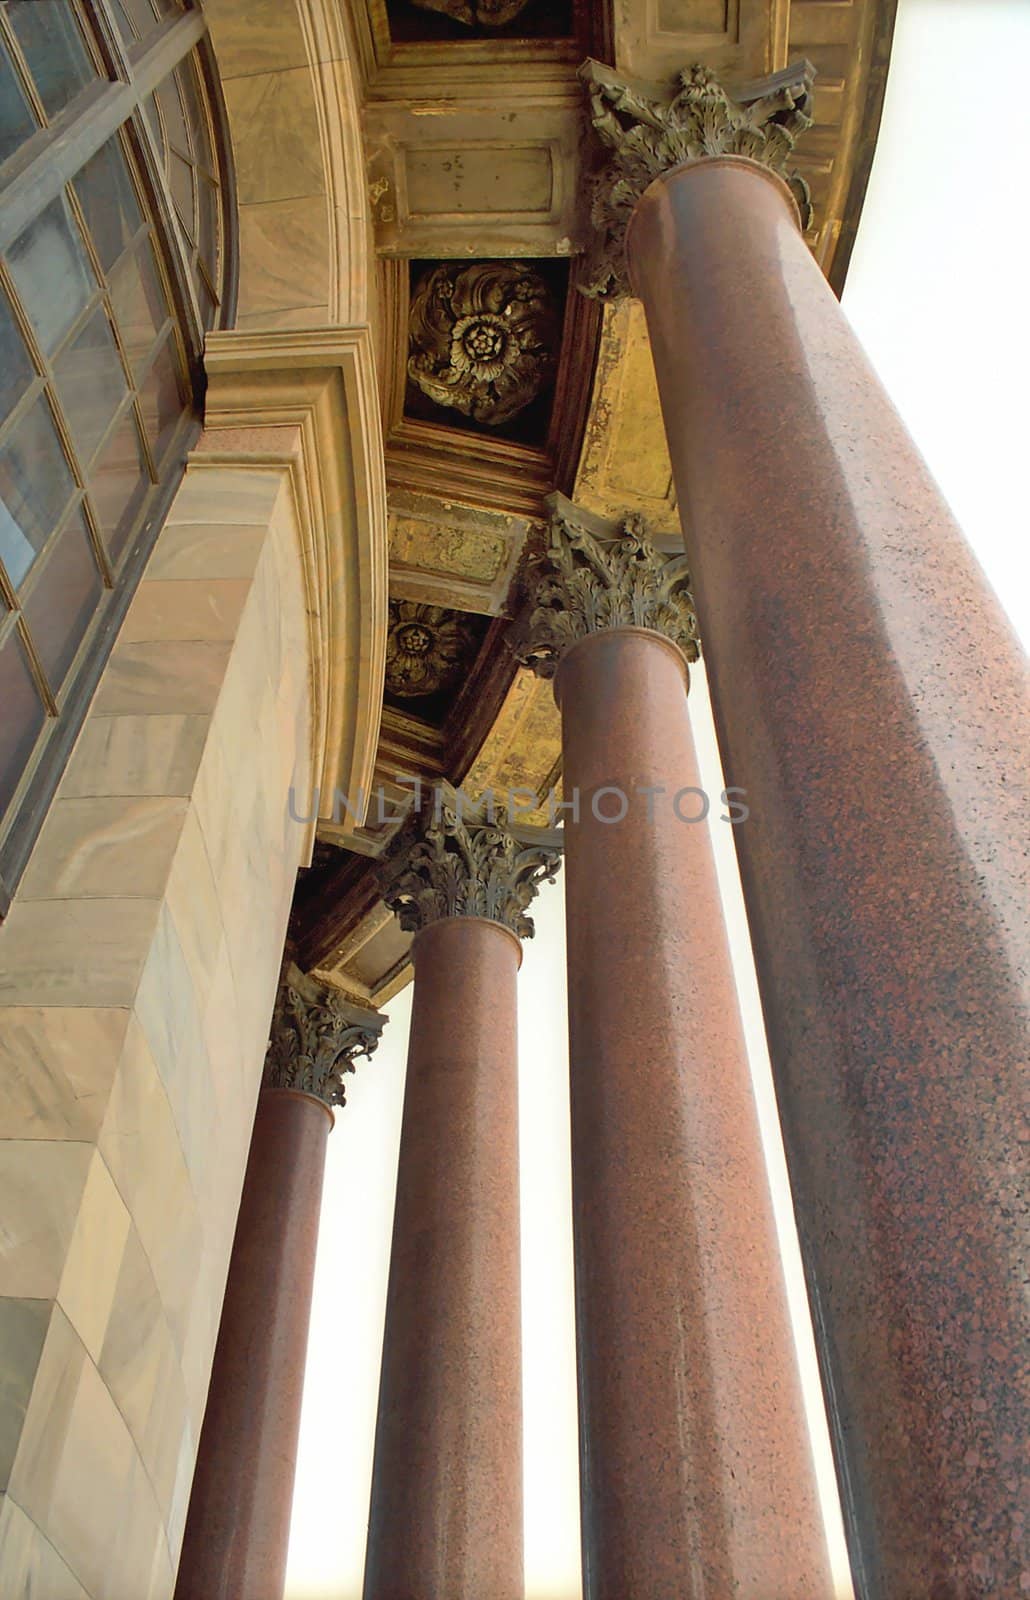 Corinthian order columns by mulden